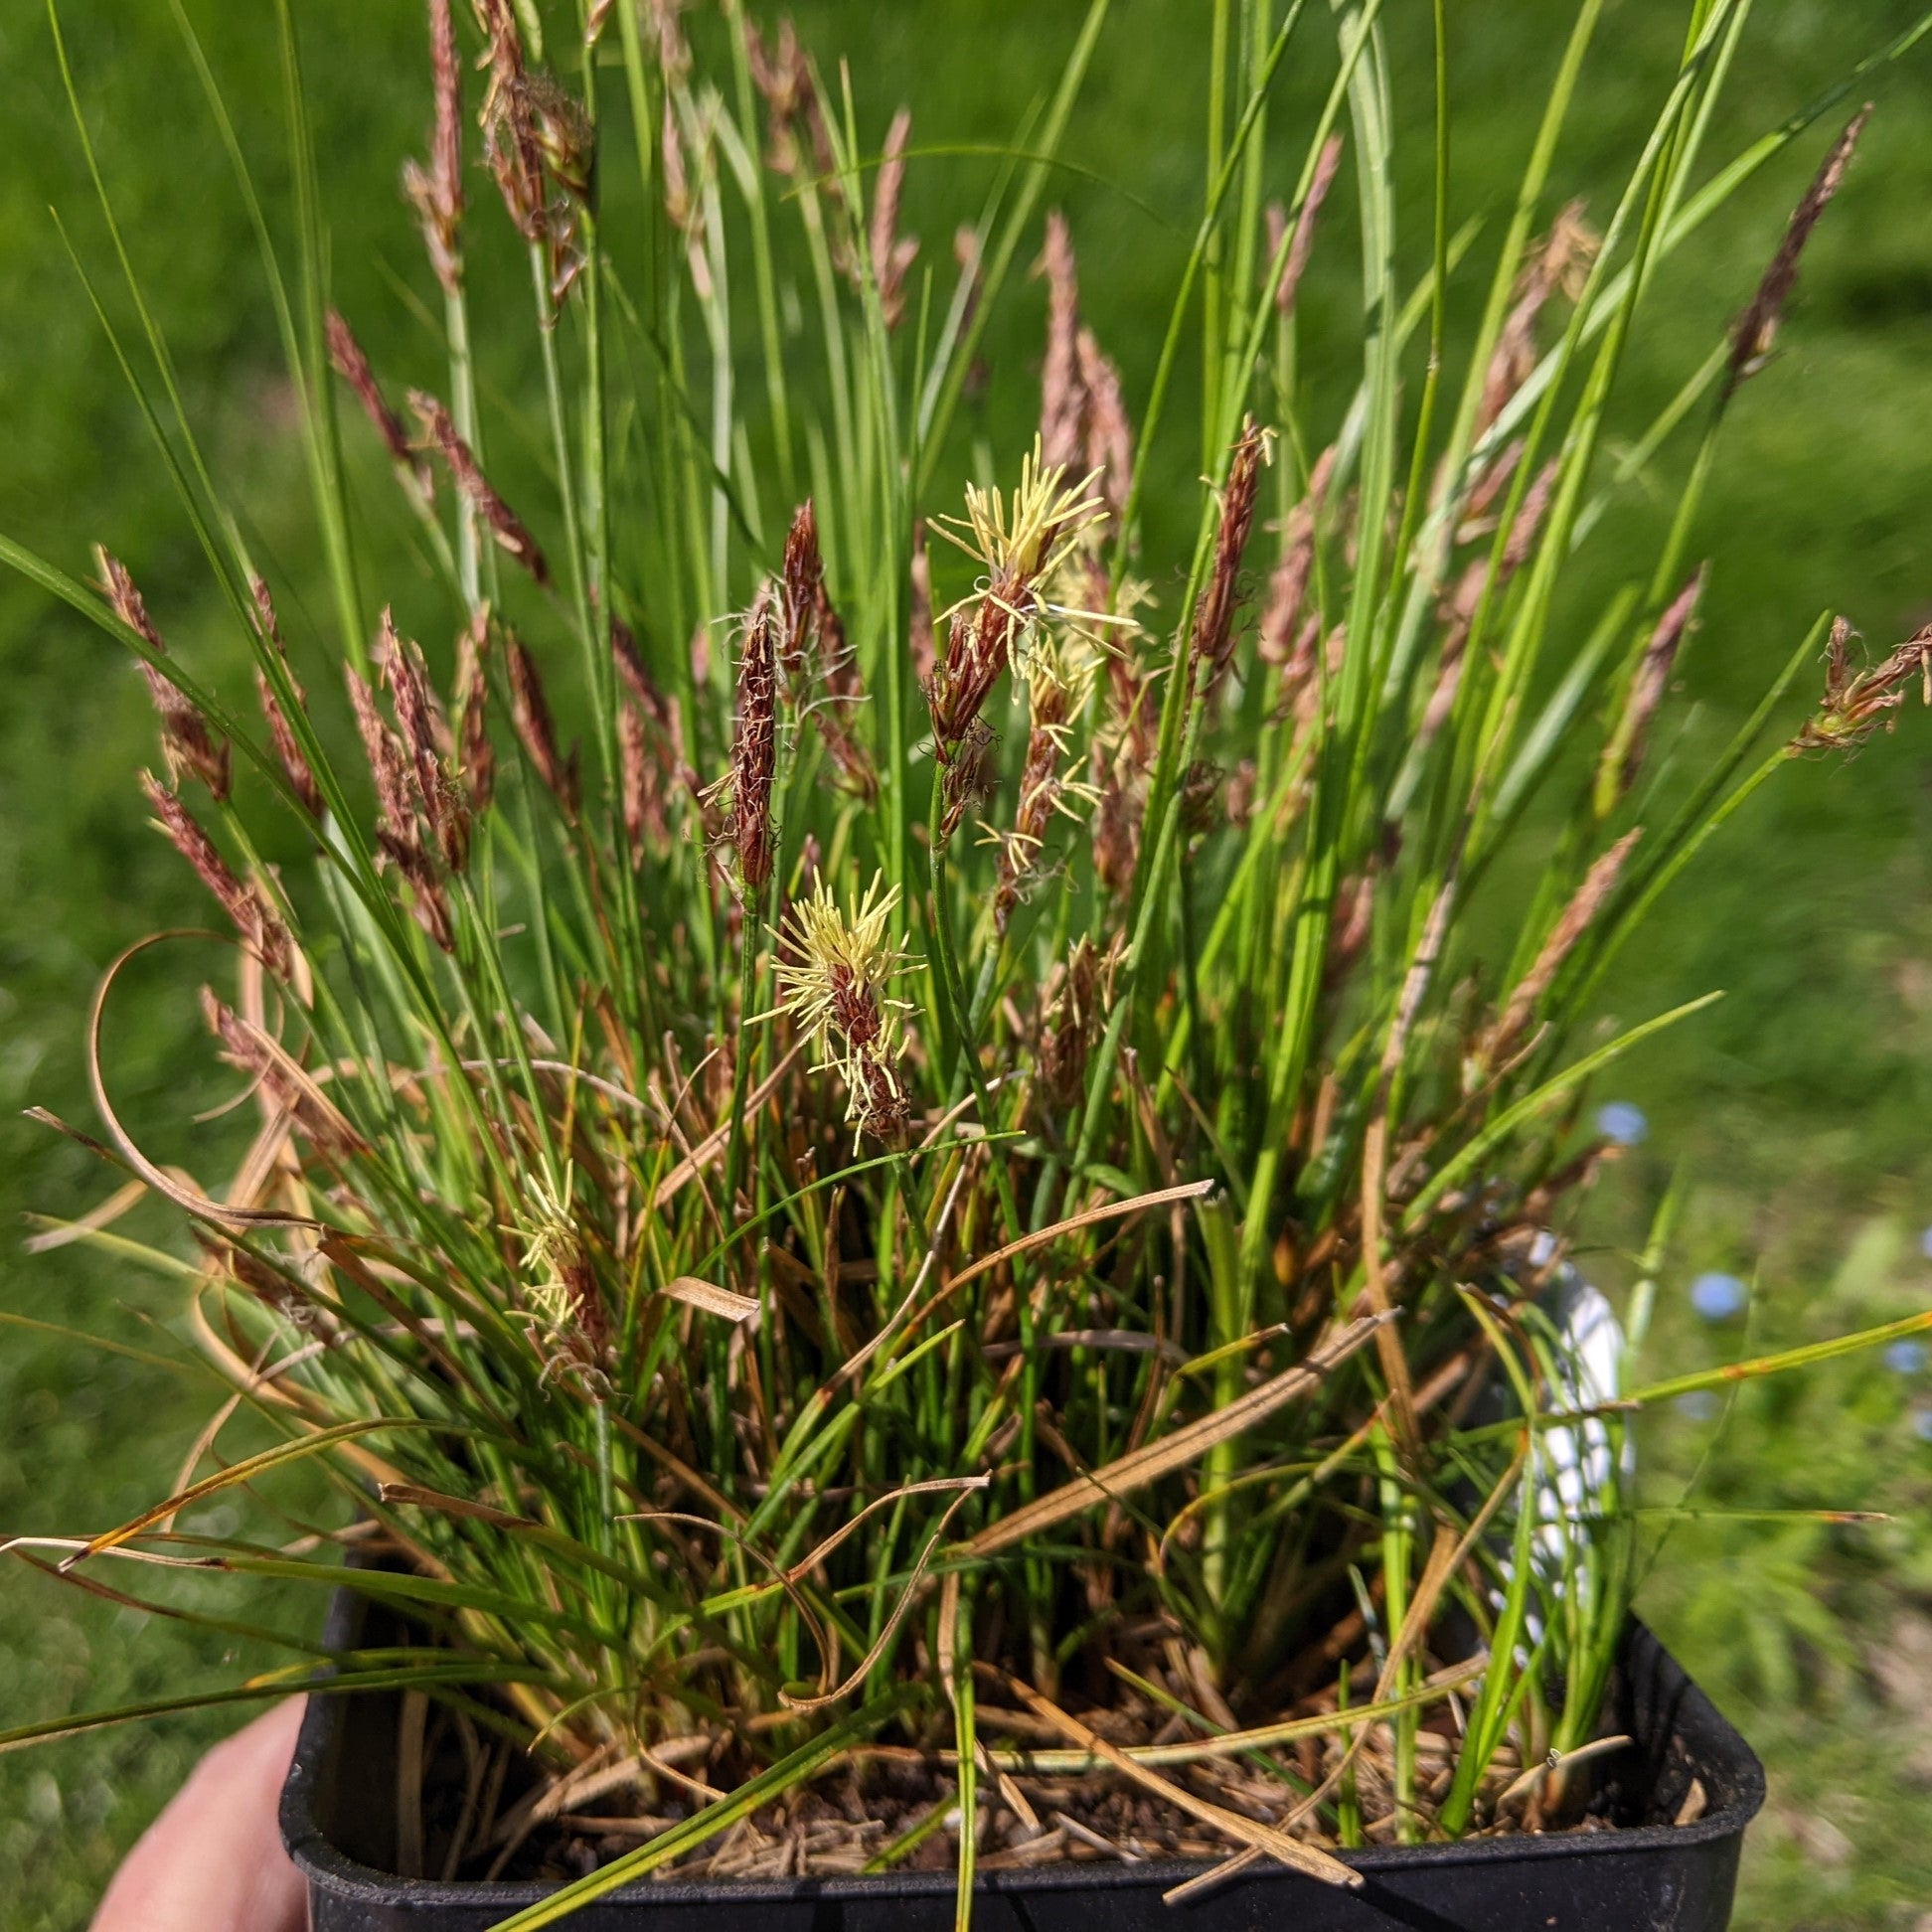 Carex pensylvanica Sedge Image Credit: Chaz Morenz 2022-05-12